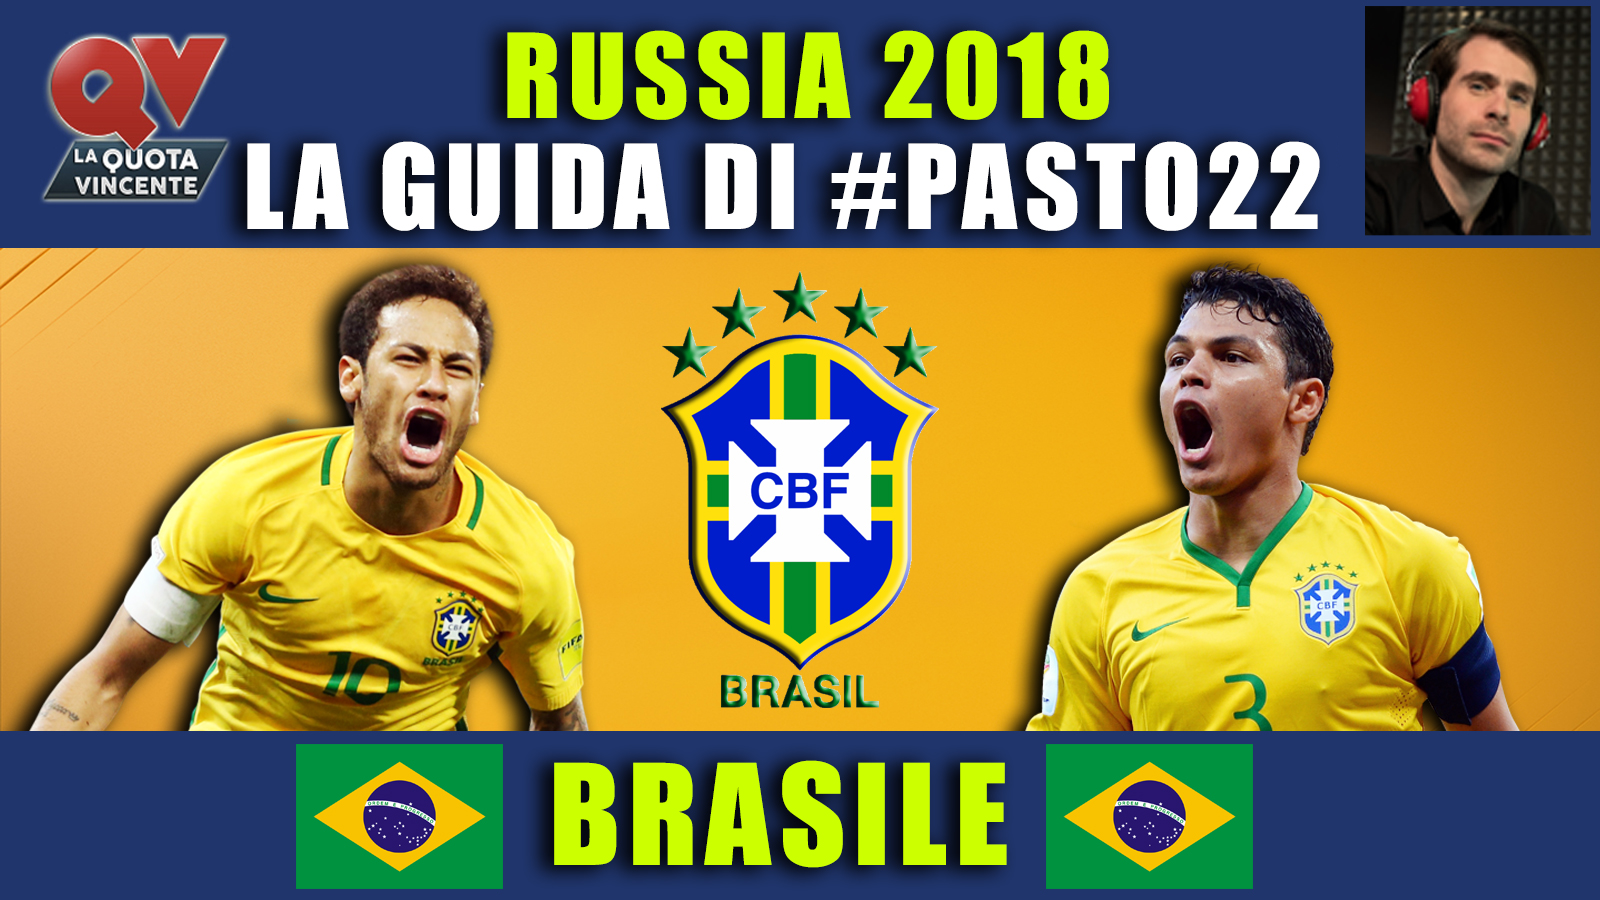 https://www.laquotavincente.it/guida-ai-mondiali-russia-2018-brasile/